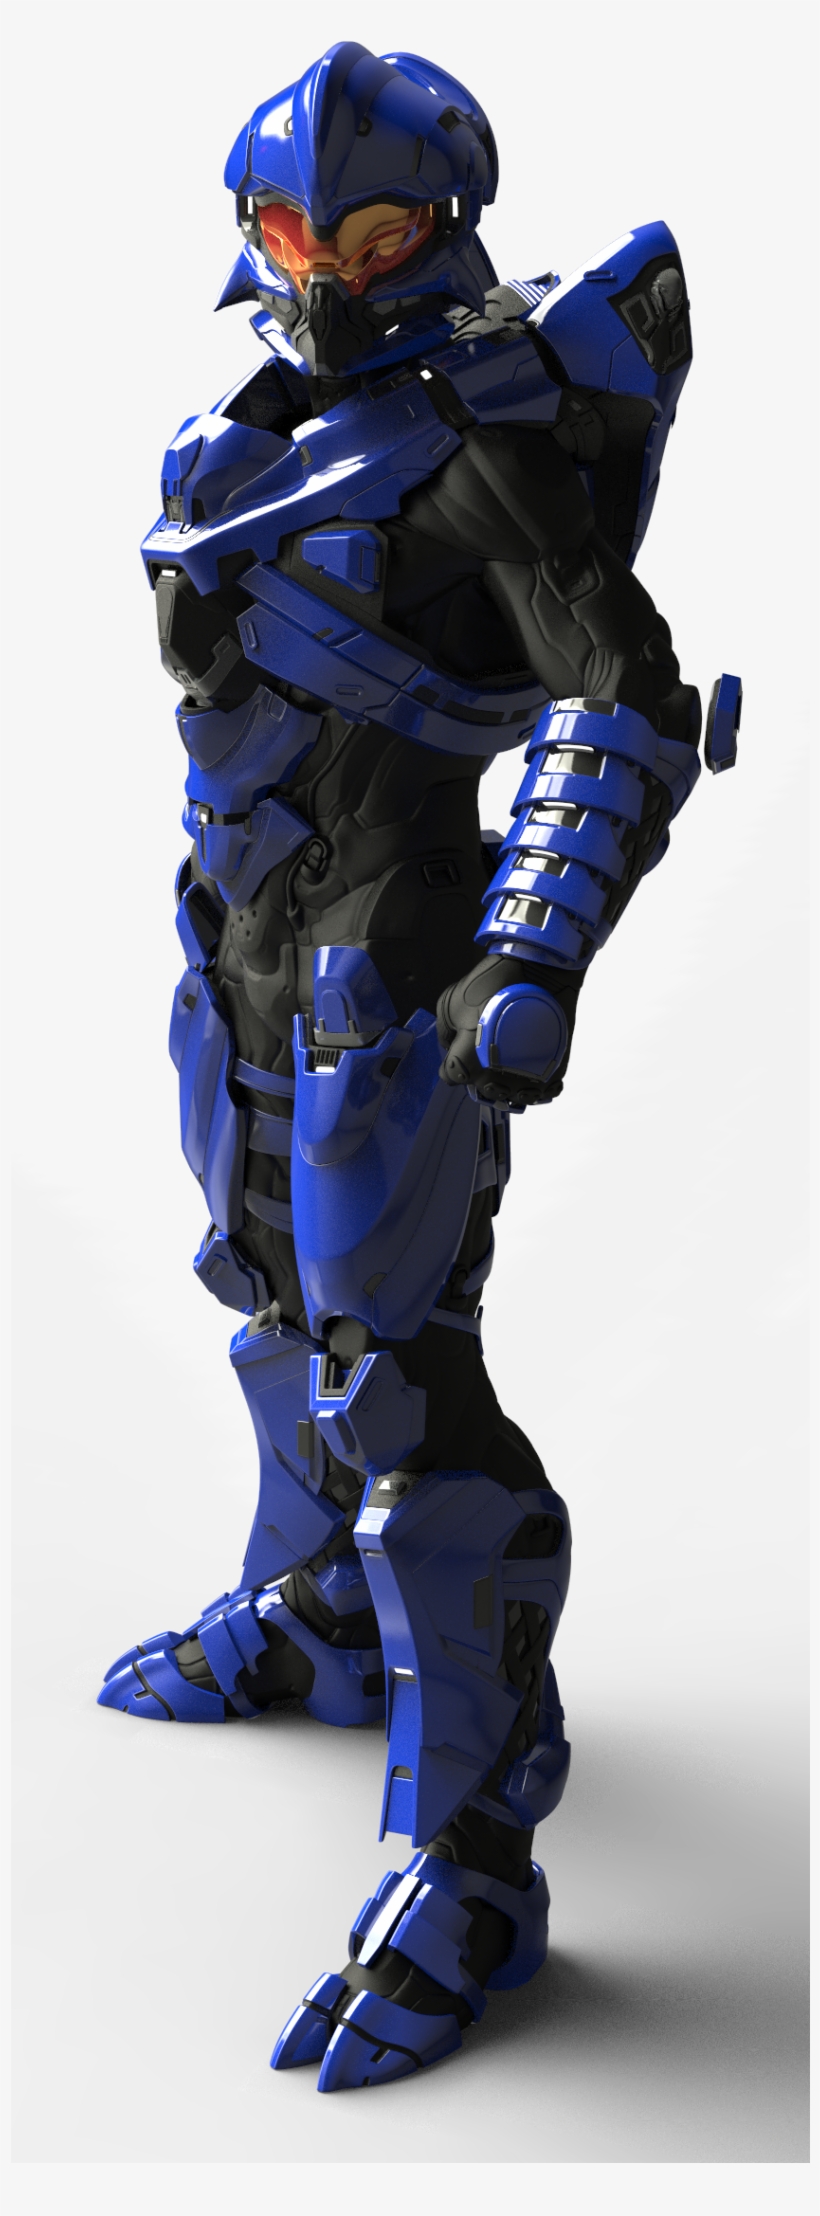 H5gmb Armor Helioskrill - Halo 5 Arbiter Spartan Armor, transparent png #6270437